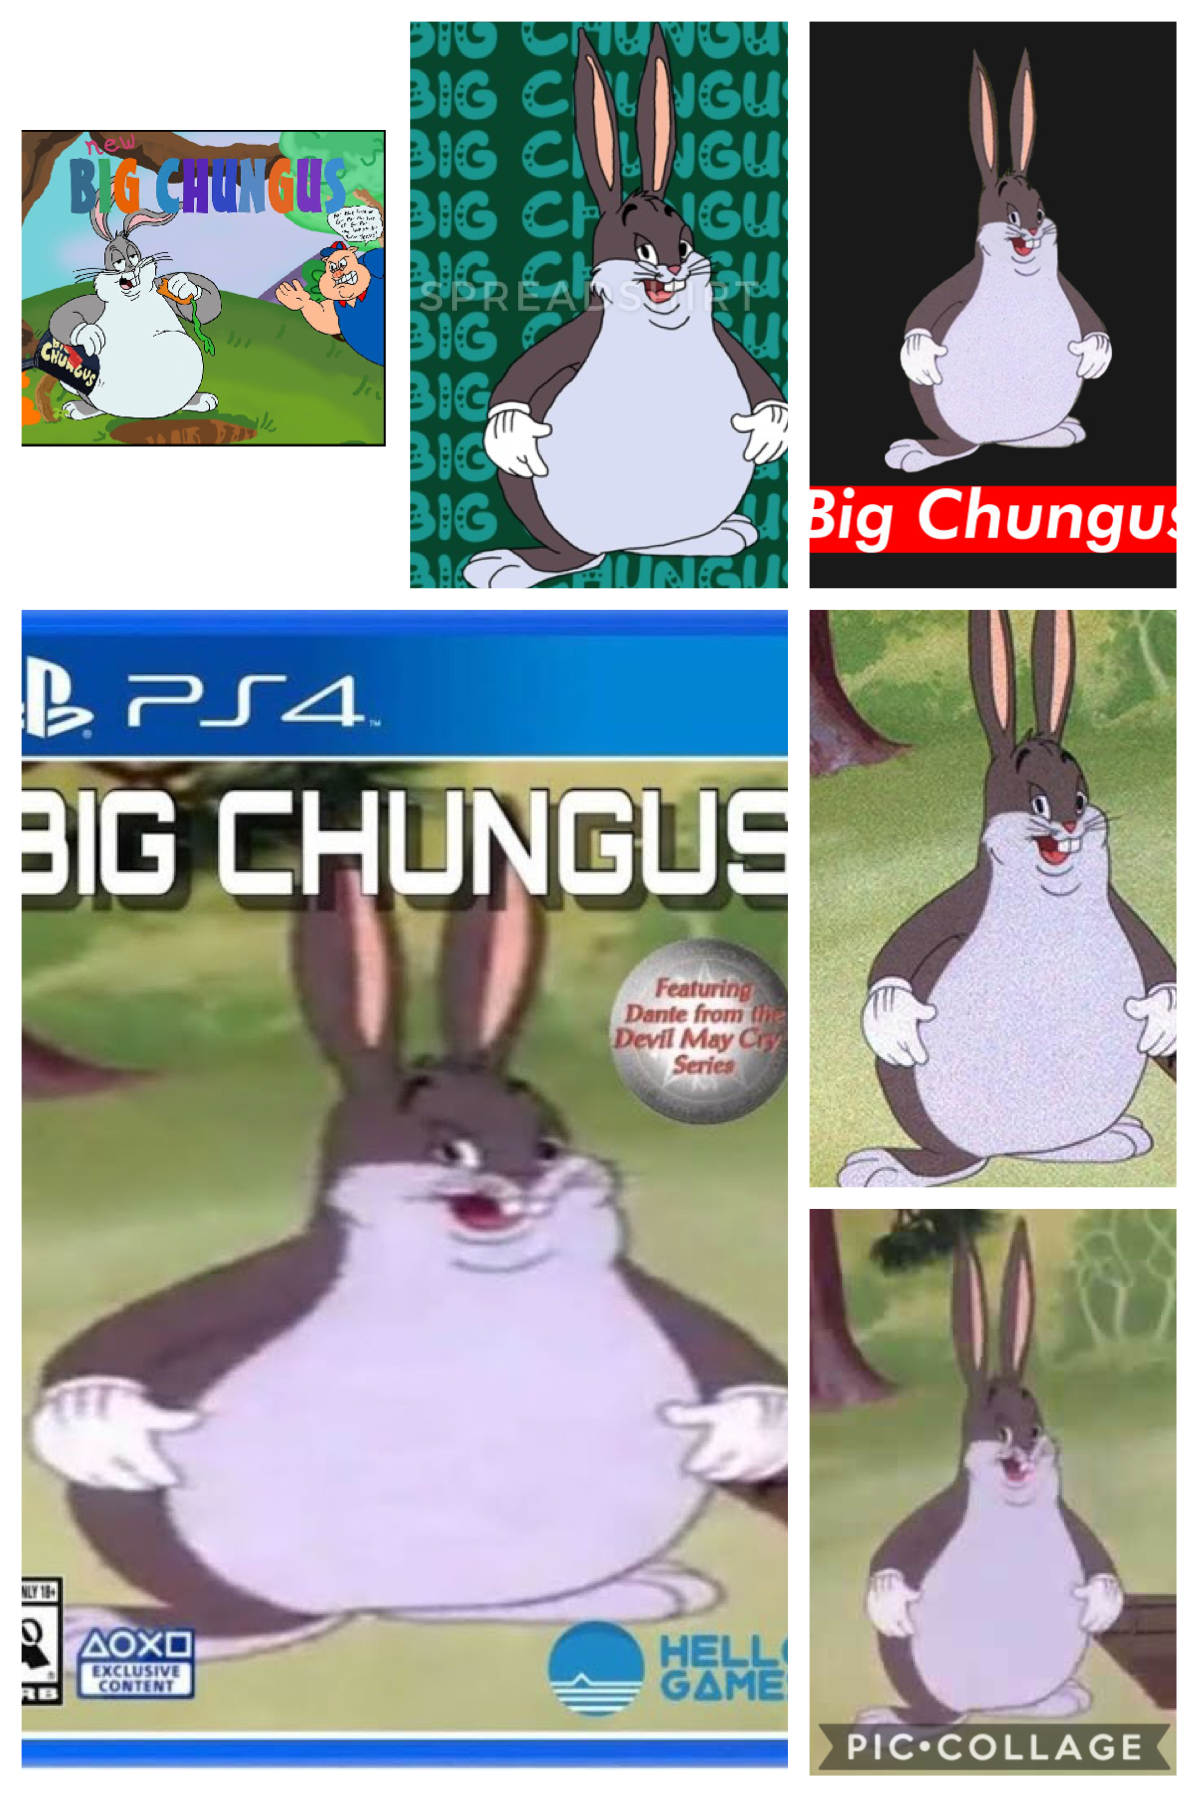 Big Chungus is my favorite 